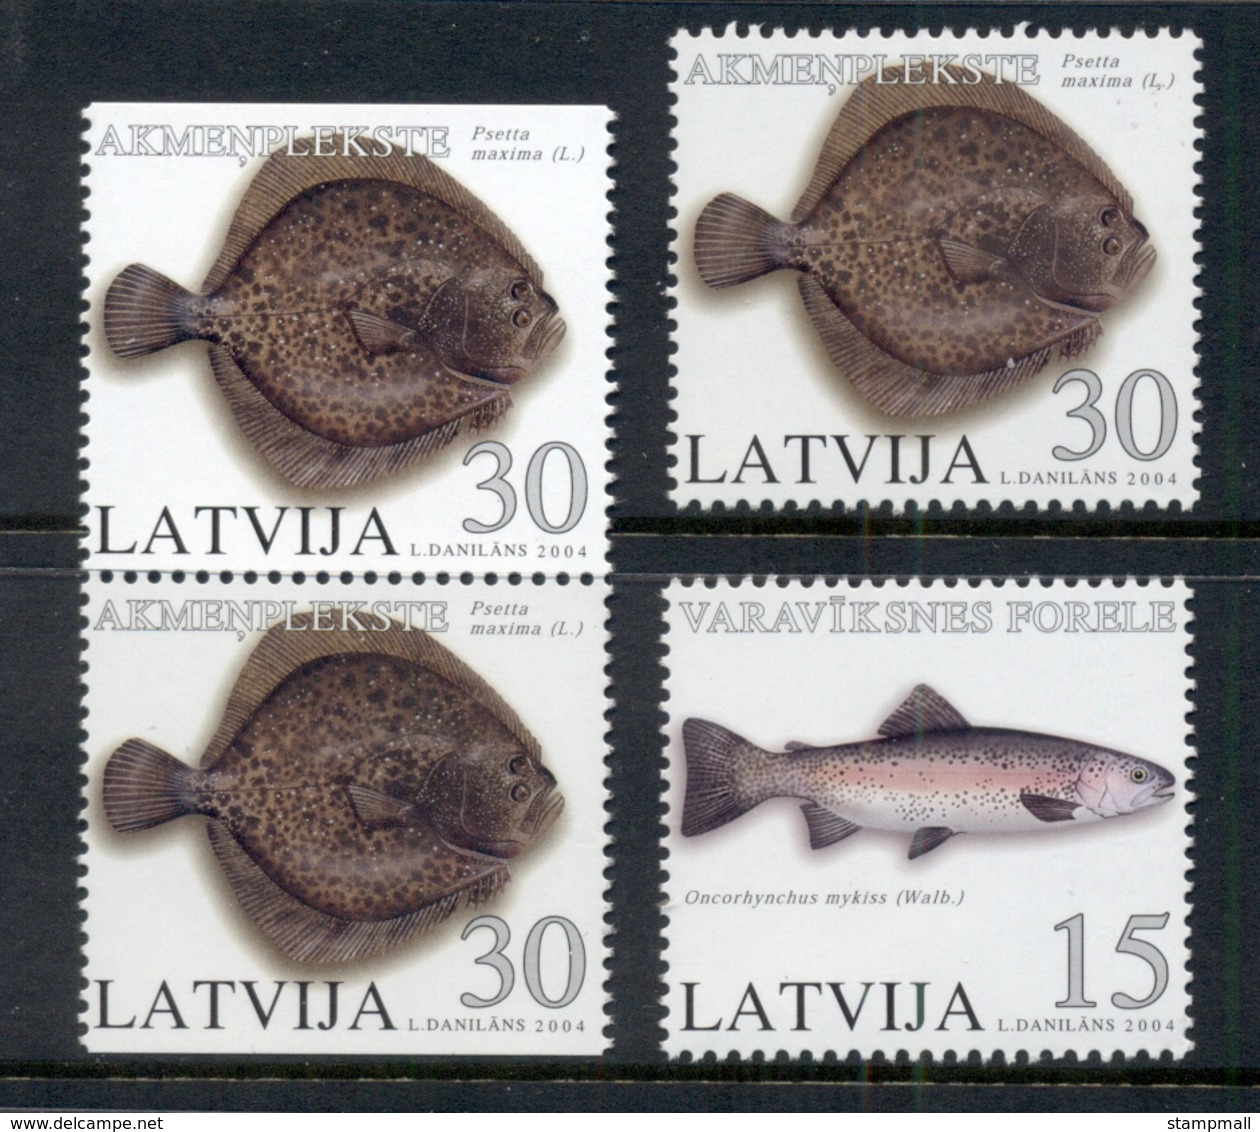 Latvia 2004 Fish MUH - Latvia